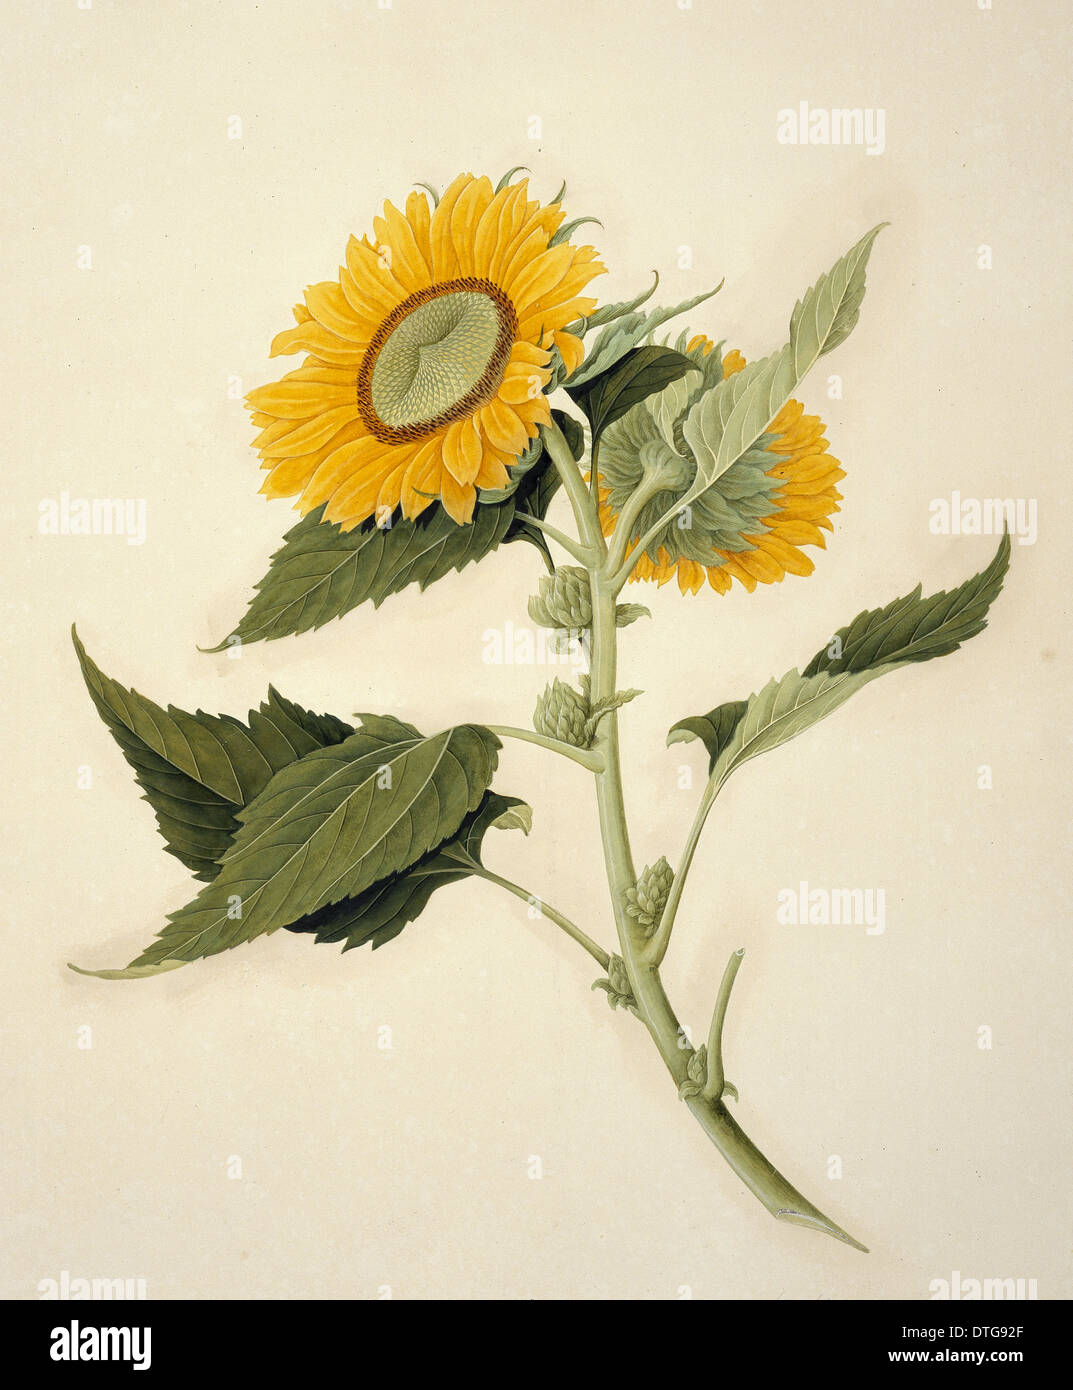 Sunflower illustration fotografías e imágenes de alta resolución - Alamy